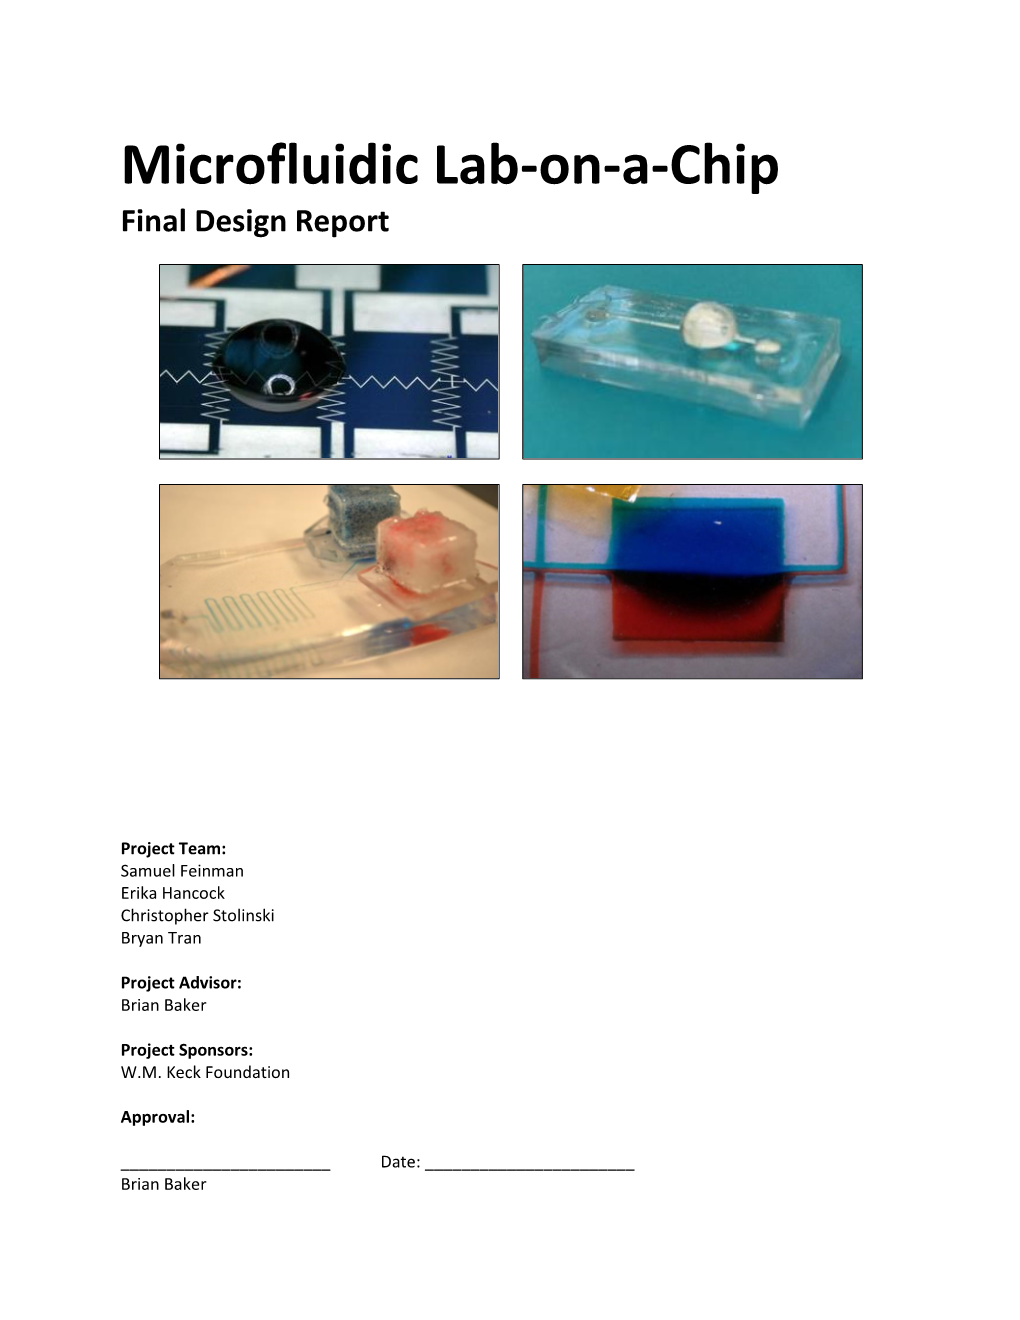 Microfluidic Lab-On-A-Chip Final Design Report